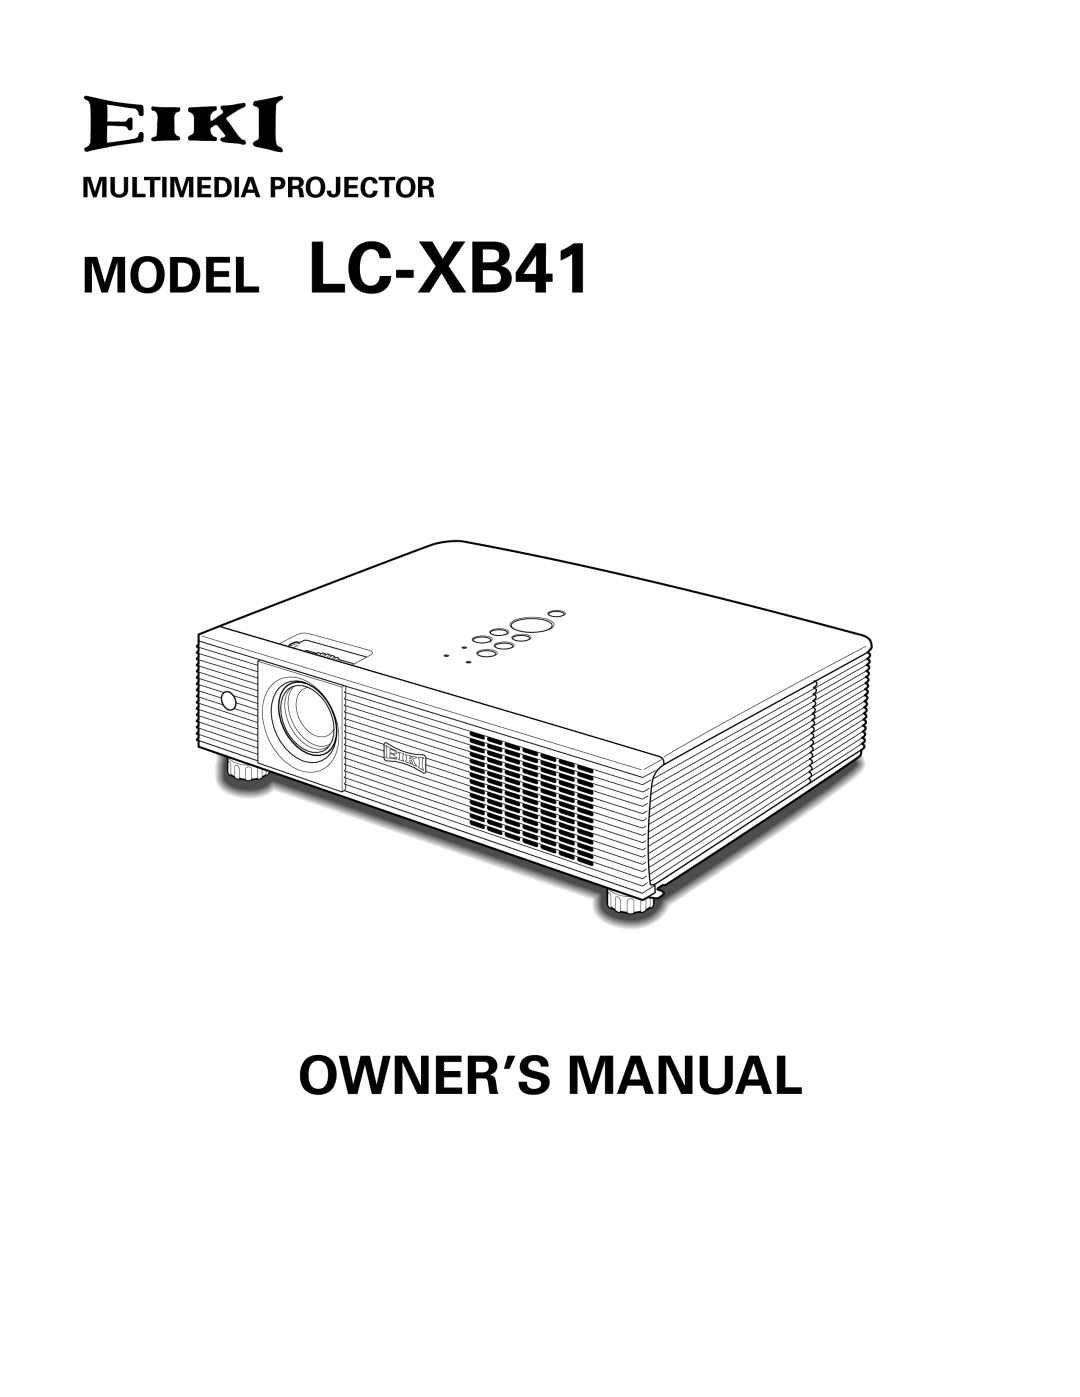 Eiki owner manual Multimedia Projector, MODEL LC-XB41 